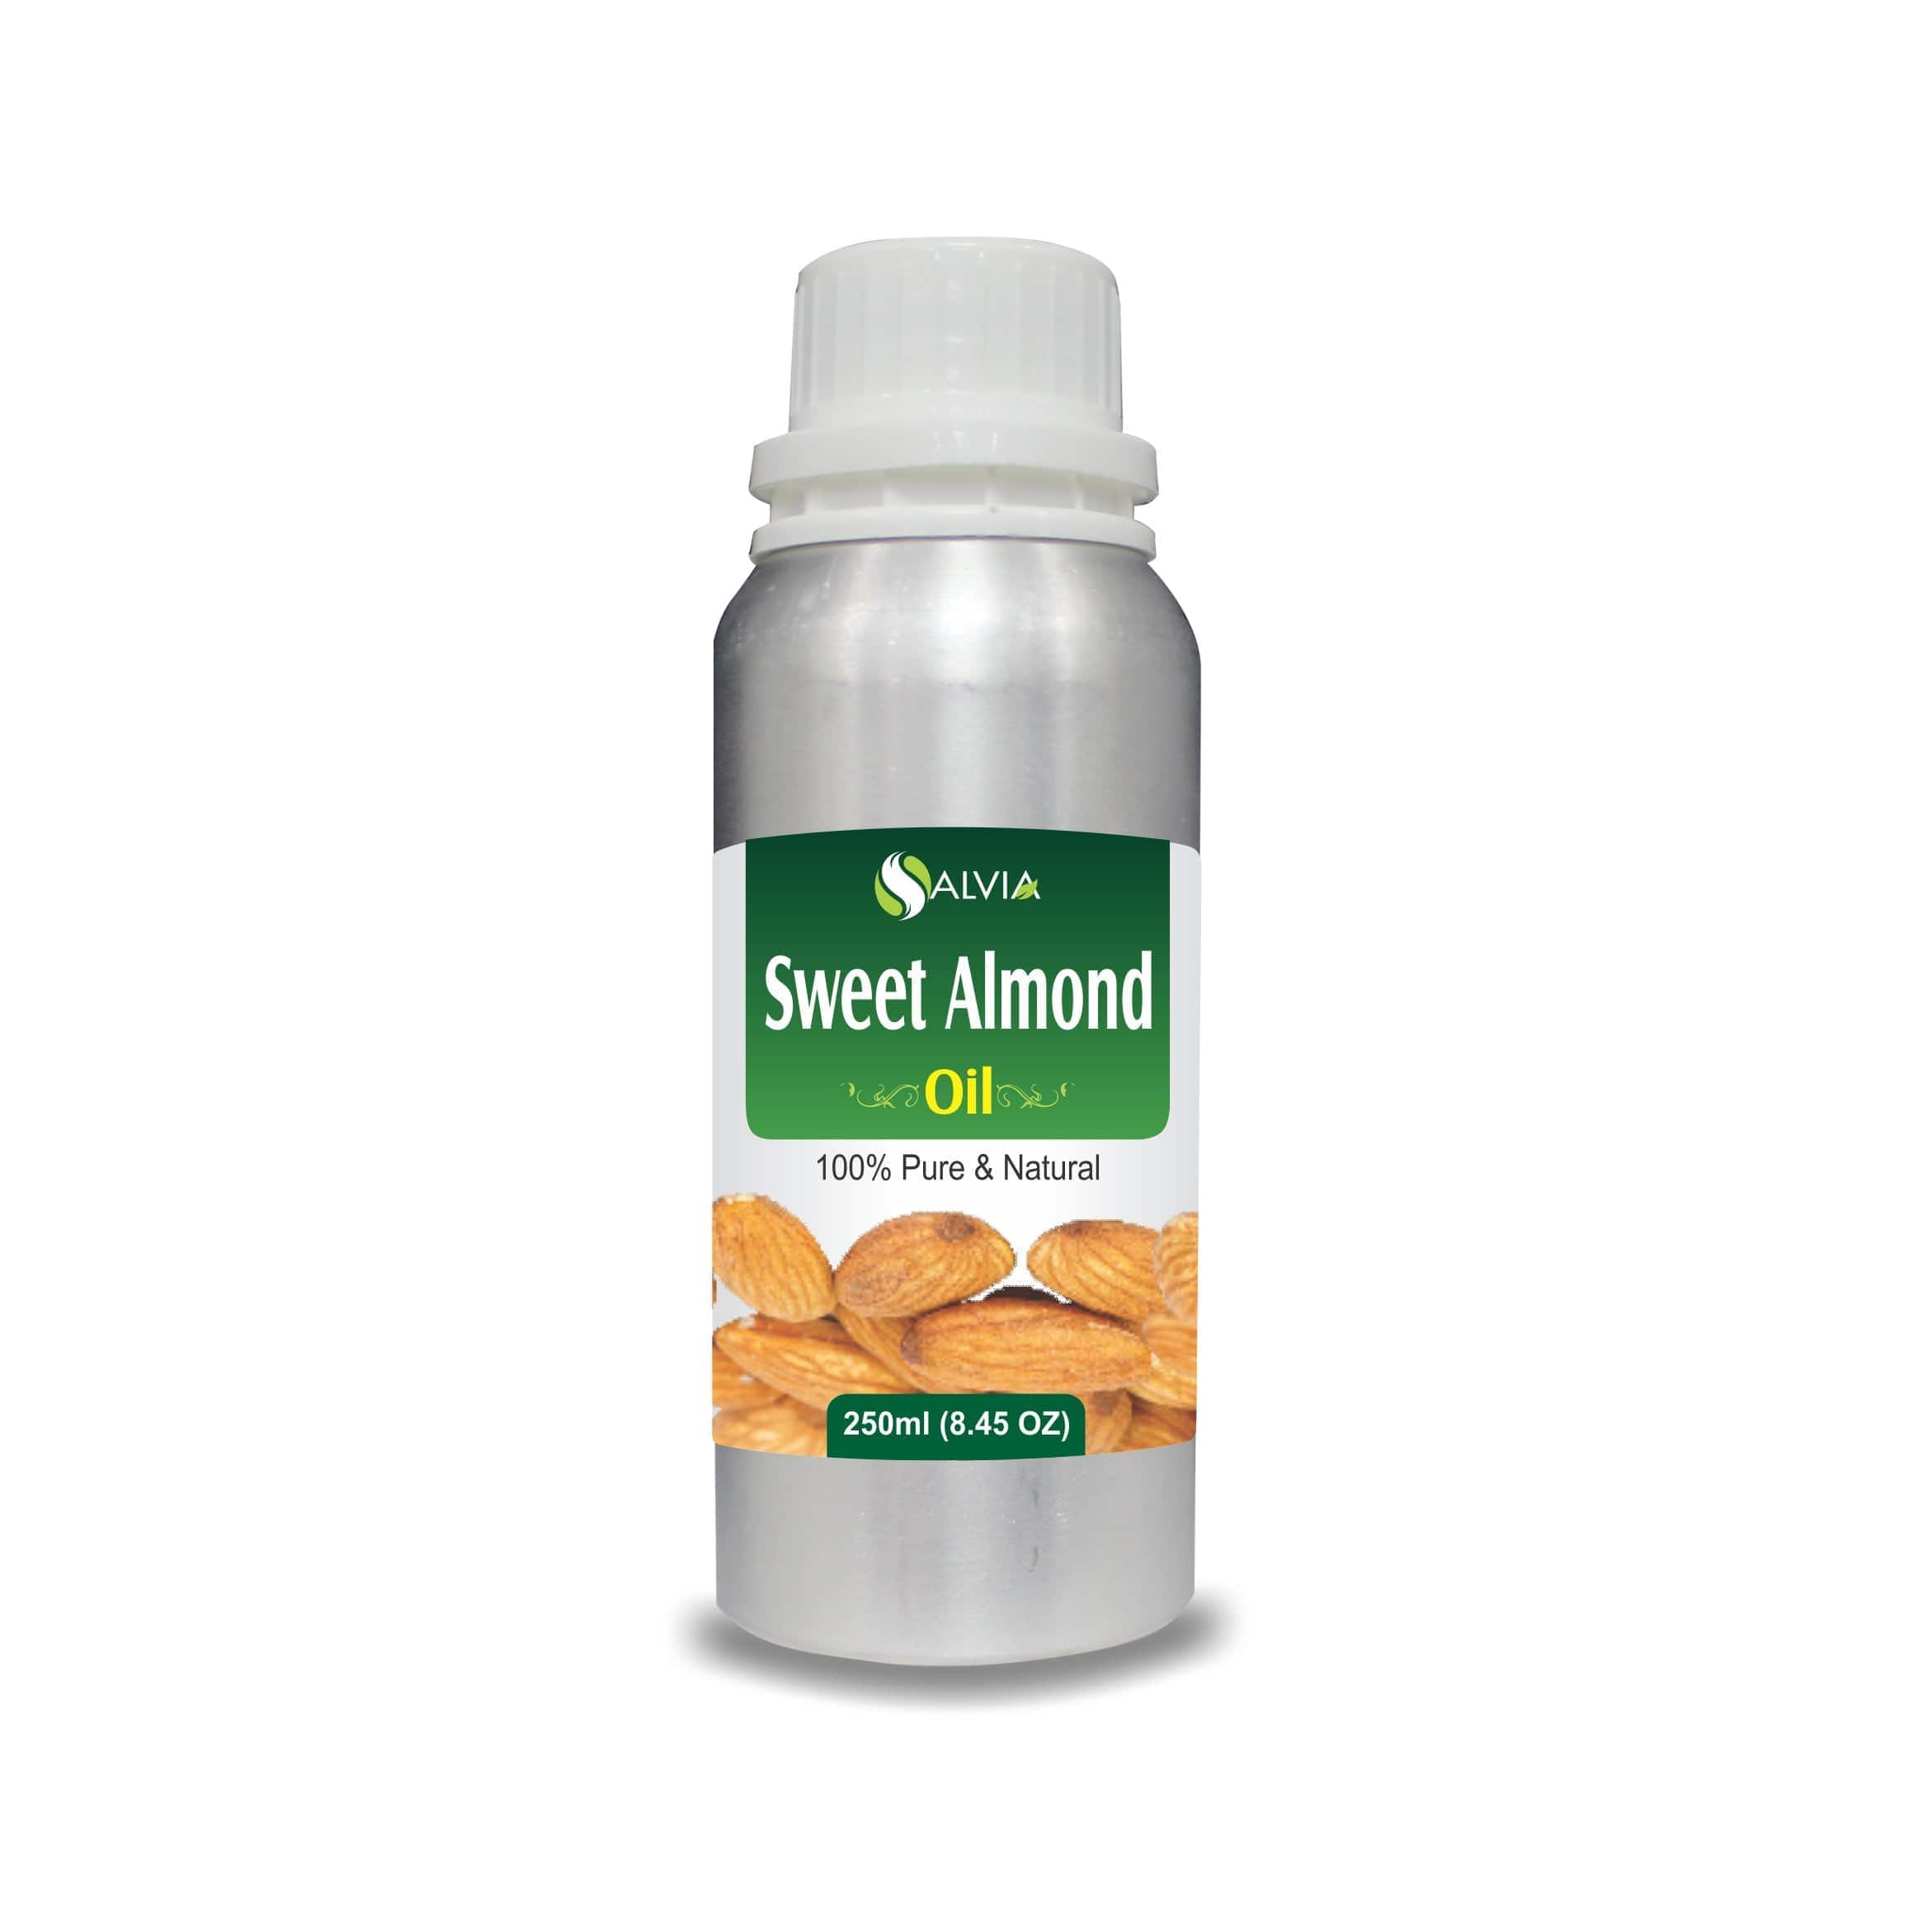 sweet almond oil for face